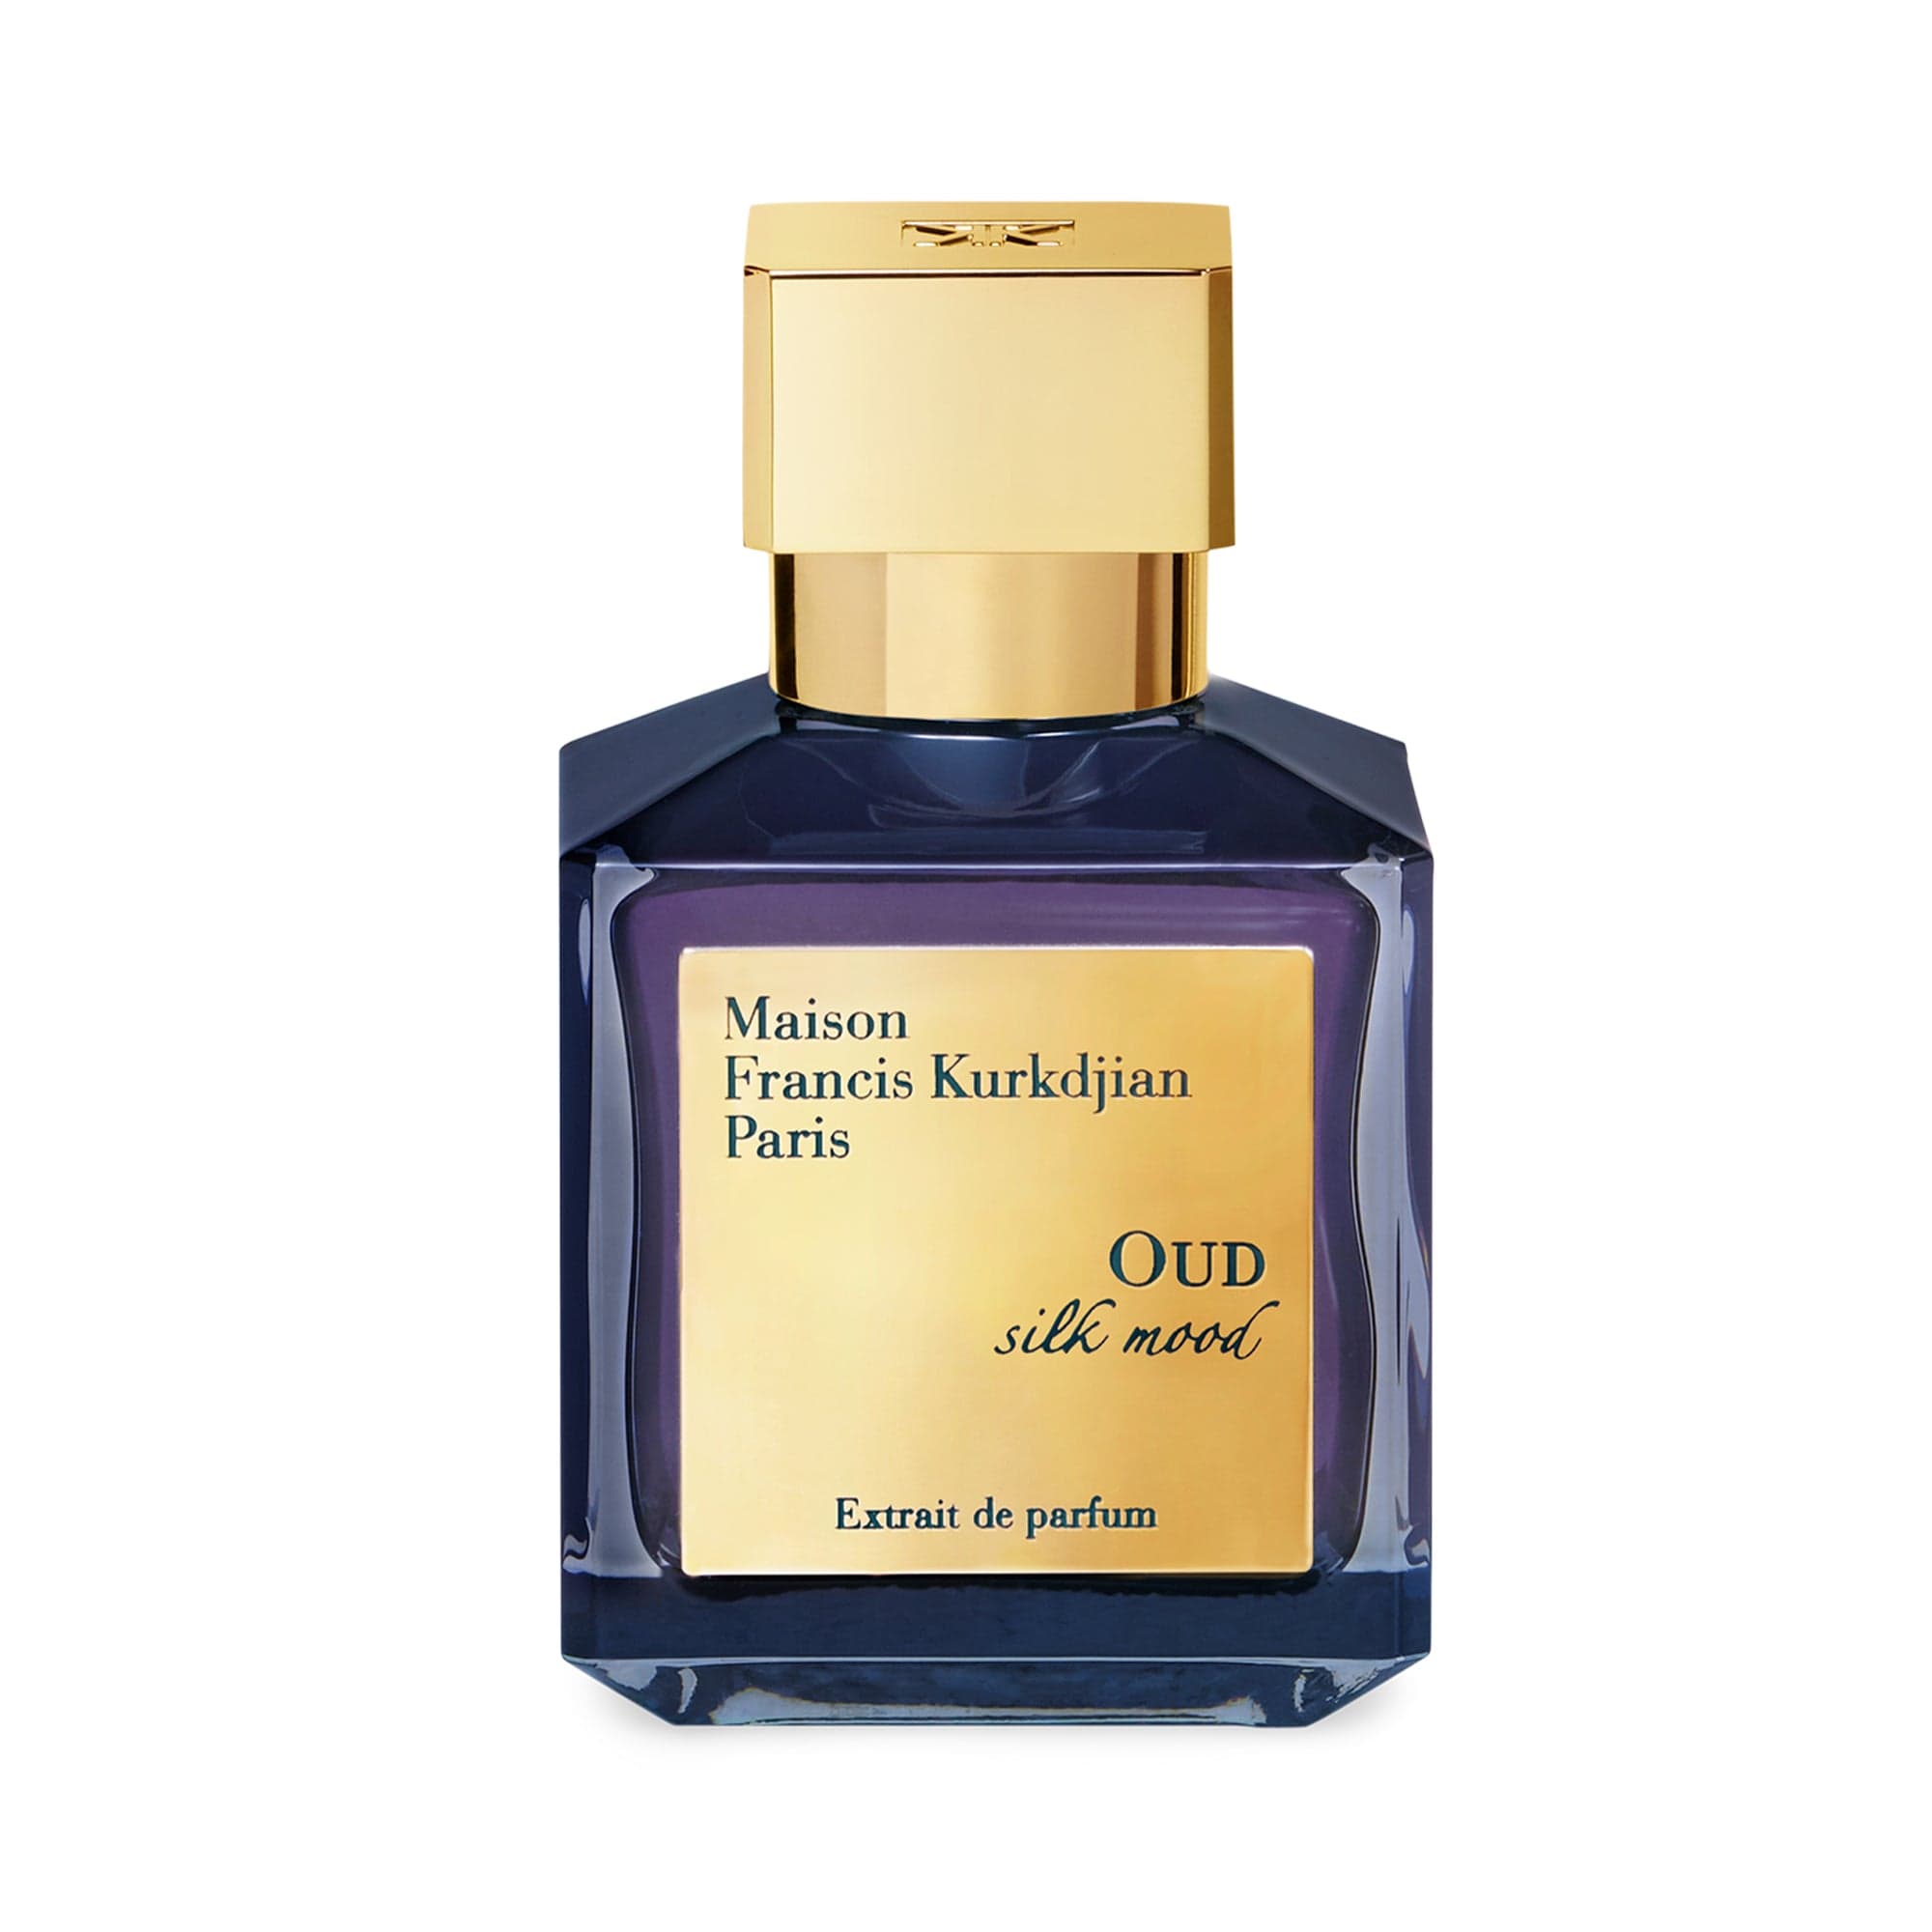 OUD Silk Mood Maison Francis Kurkdjian Extracto de Perfume